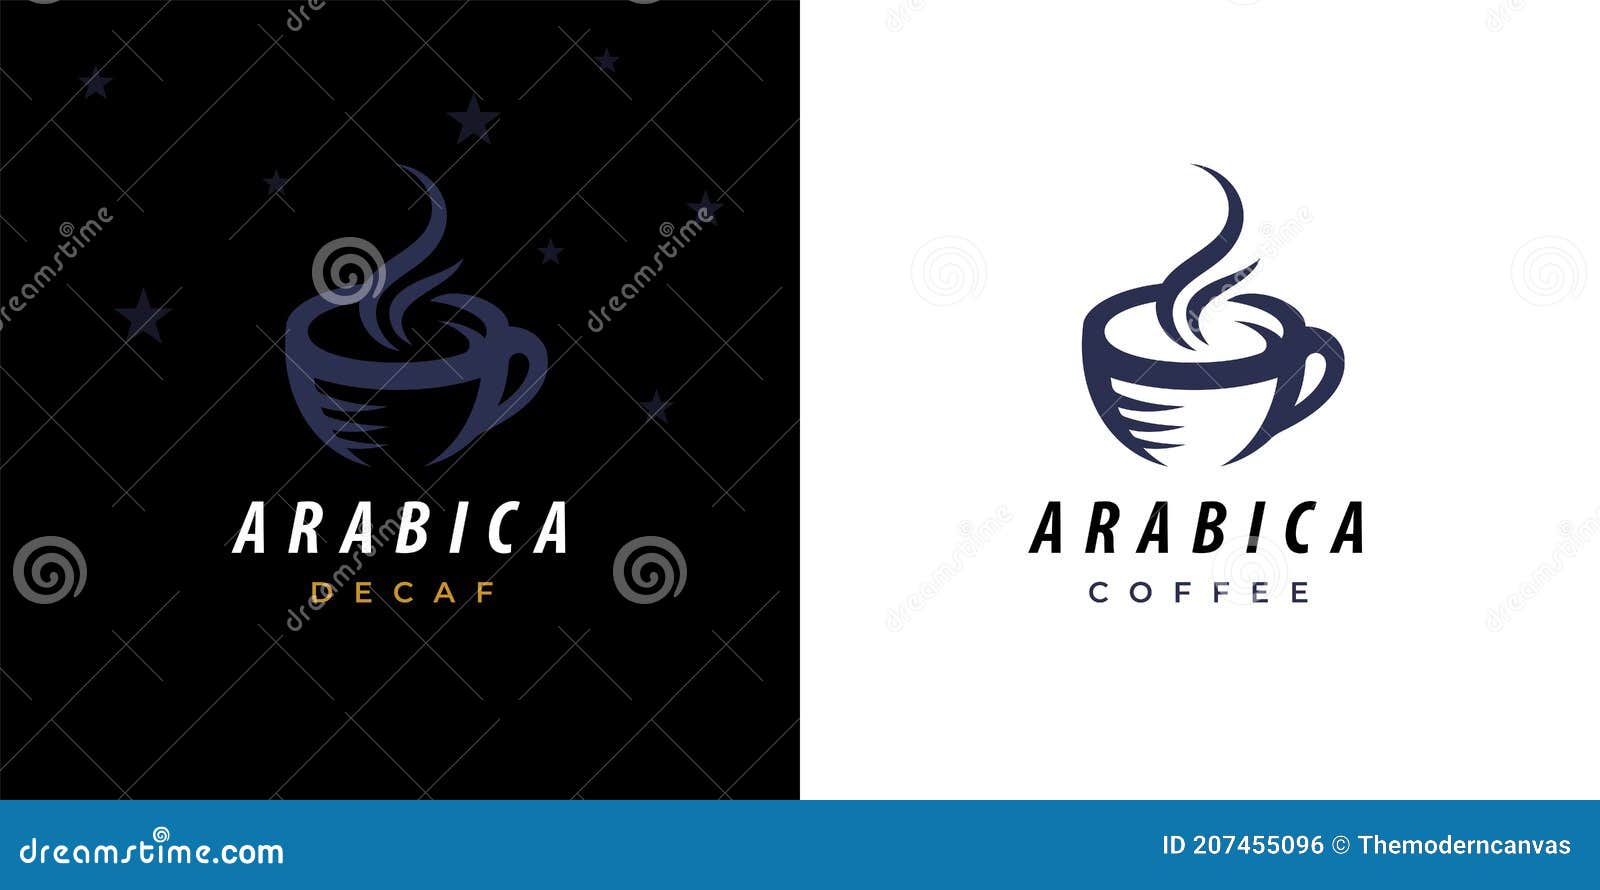 Arabica coffee logo icon stock vector. Illustration of aroma - 207455096